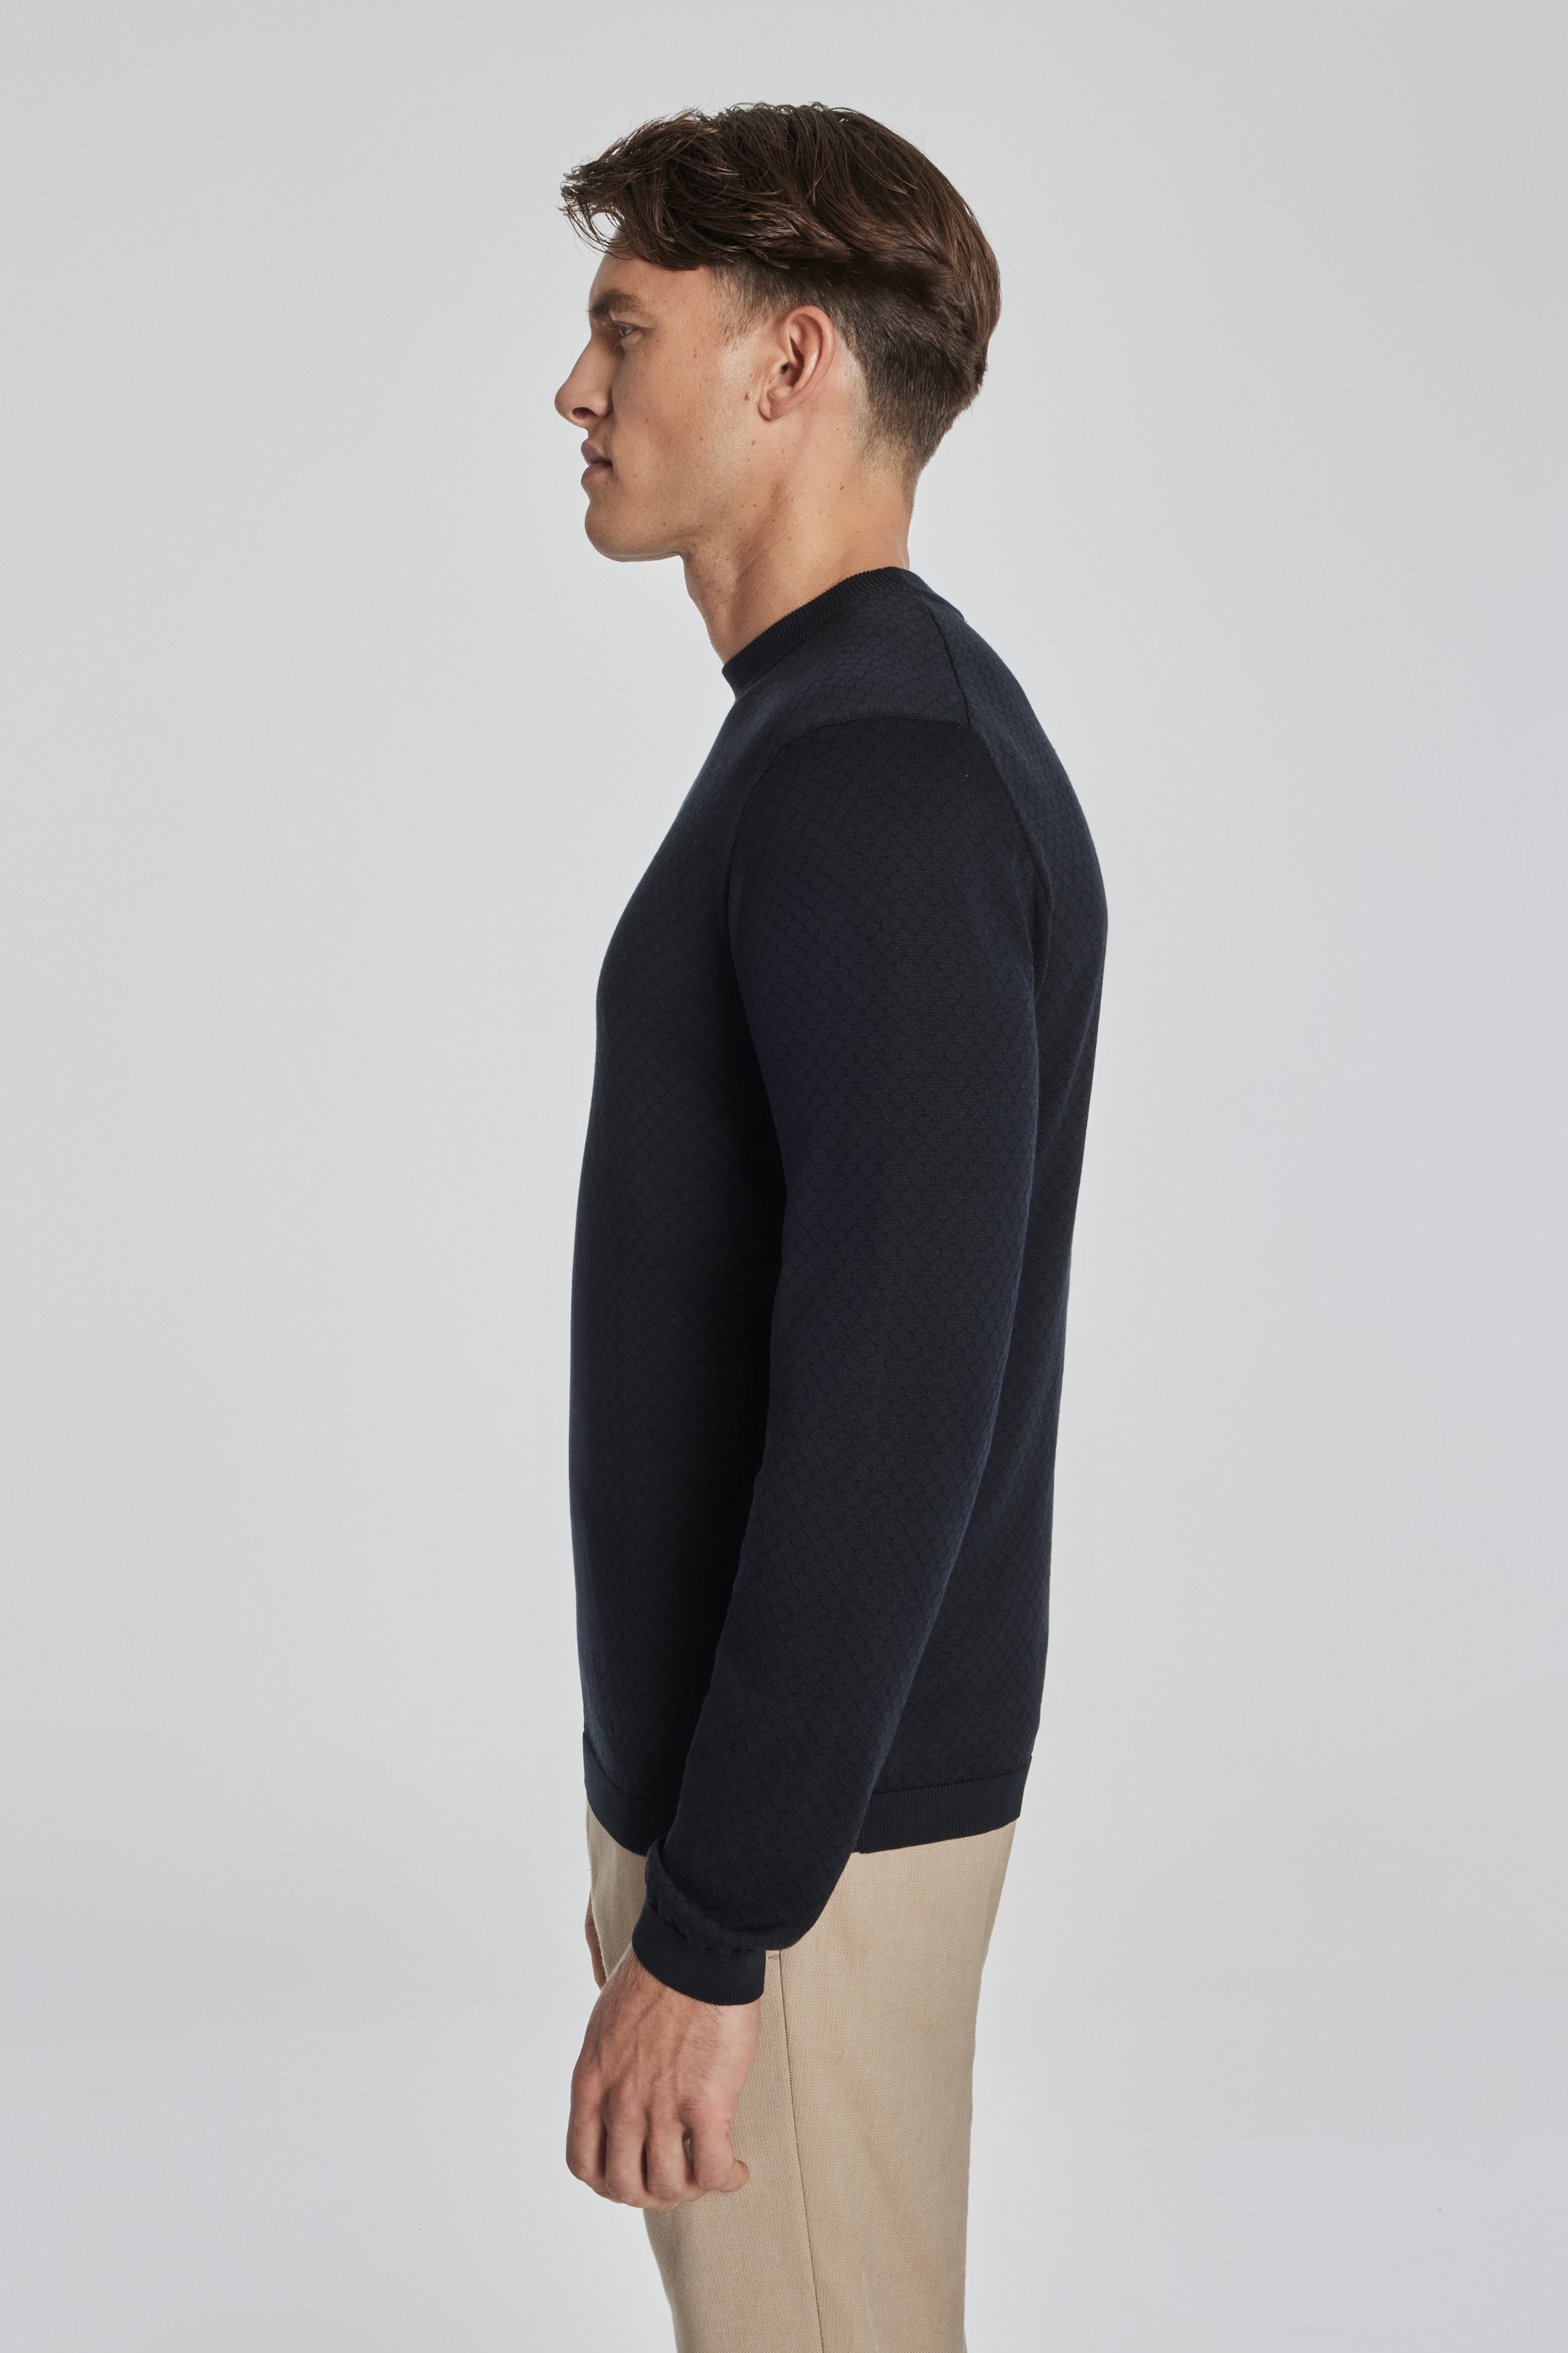 TIANEK Fashion Print Long Sleeve Comfortable Breathable Round-Neck